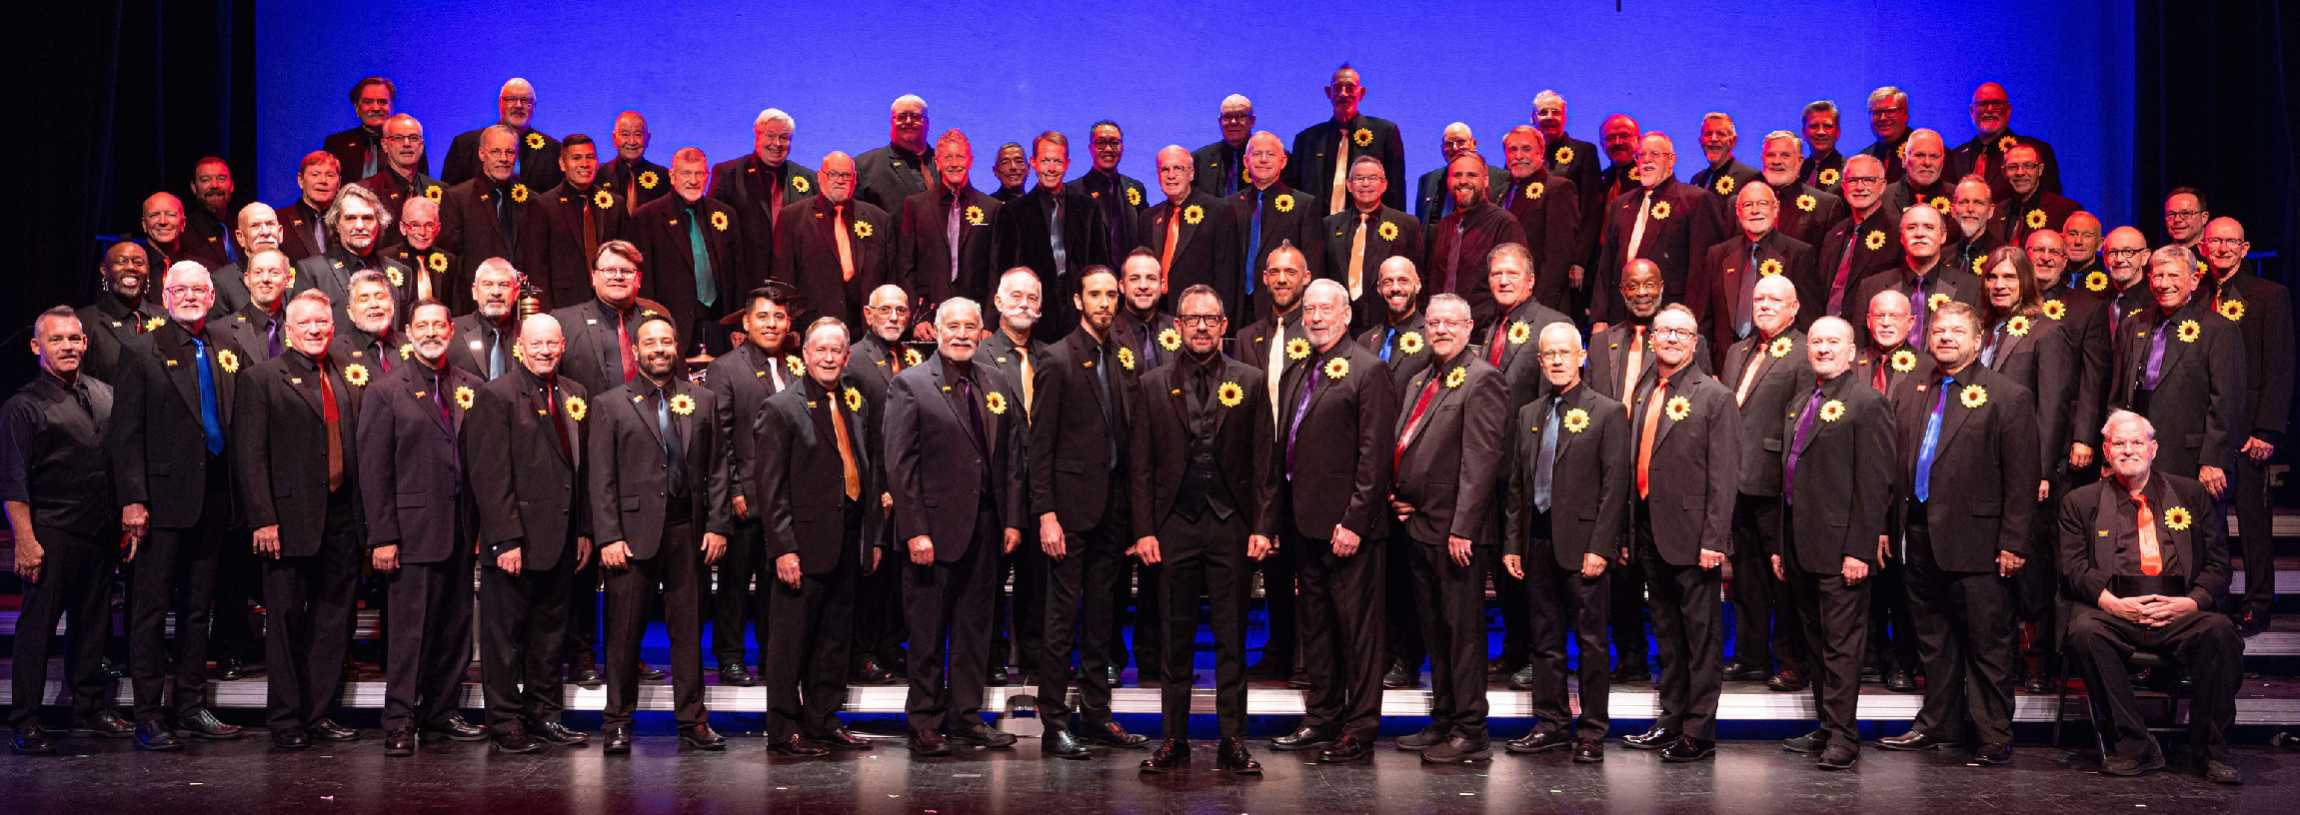 Palm Springs Gay Men's Chorus "Notorius"